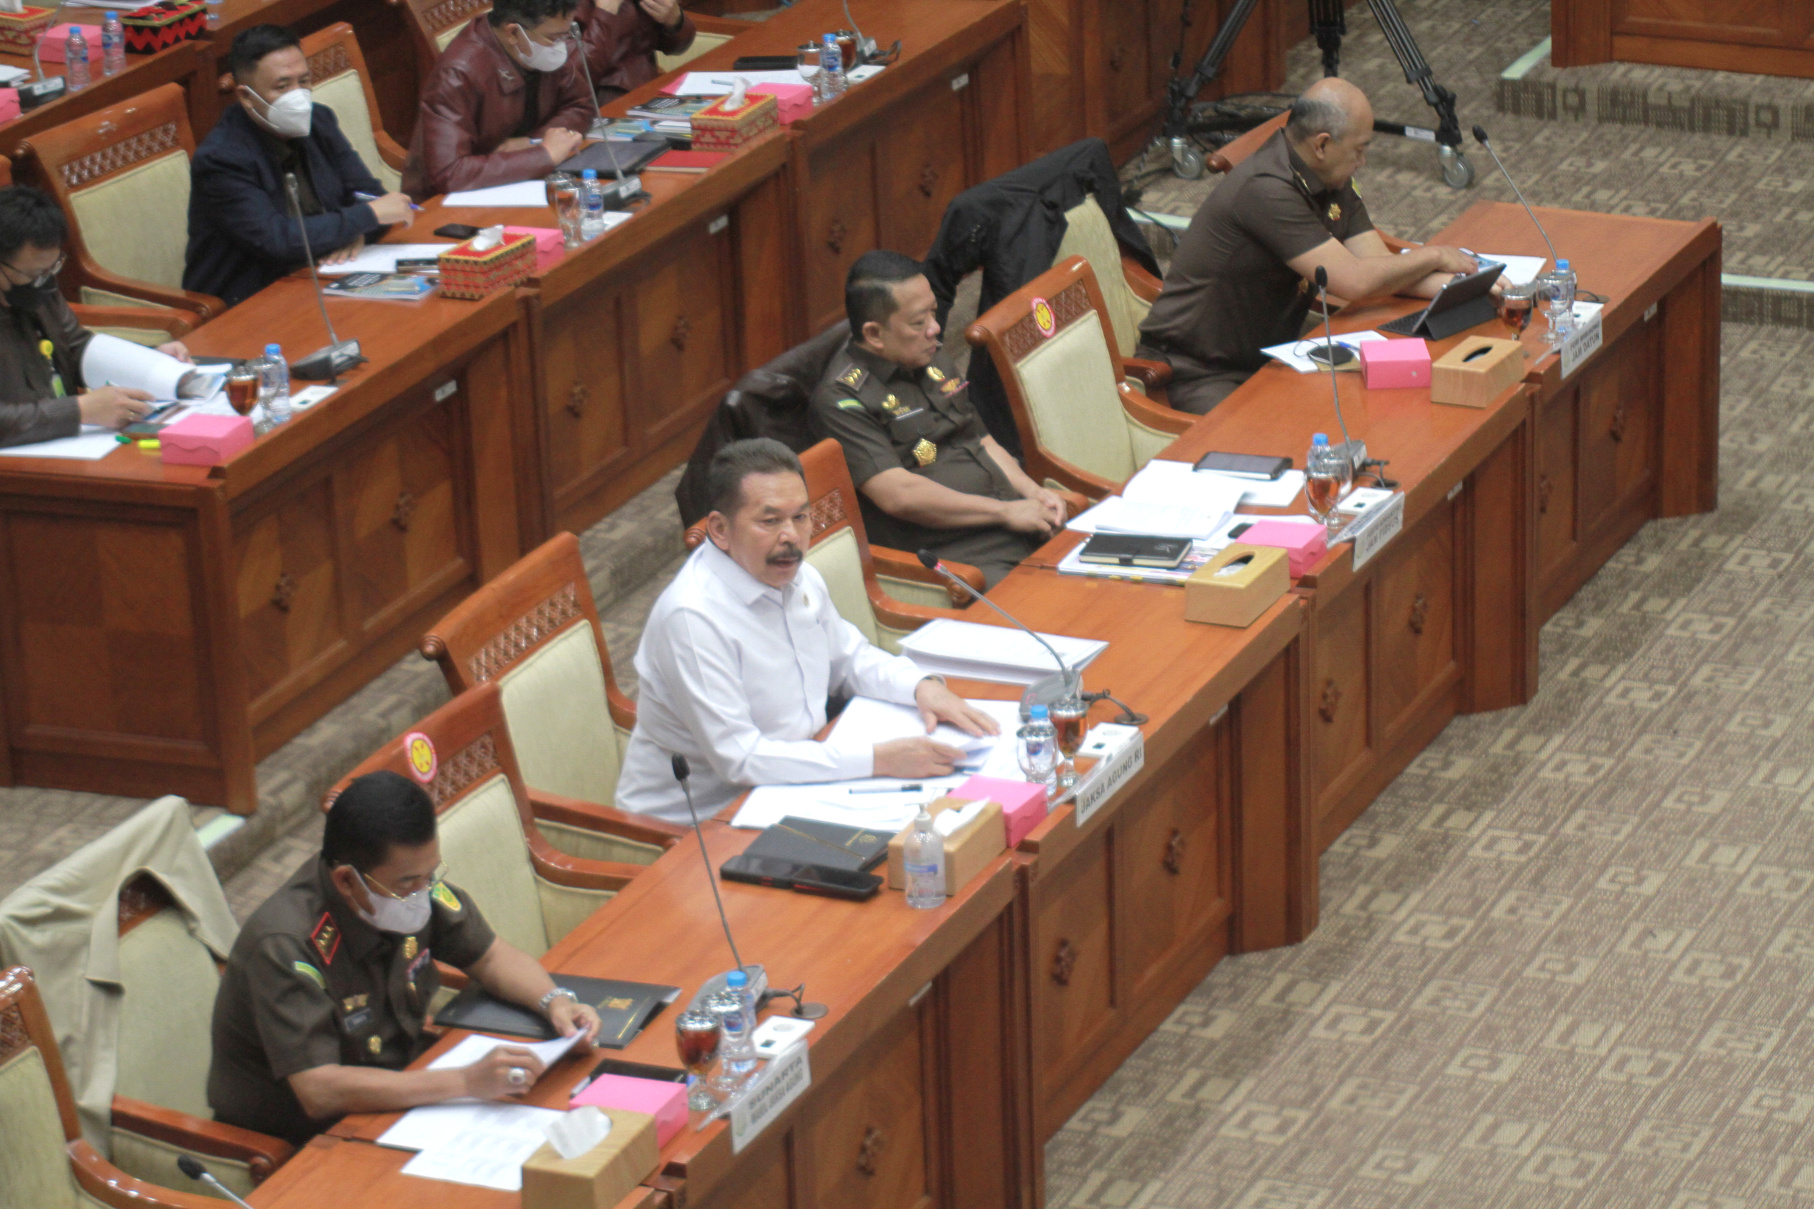 Jaksa Agung Sanitiar Burhanuddin mengikuti raker bersama Komisi III DPR (Ashar/SinPo.id)